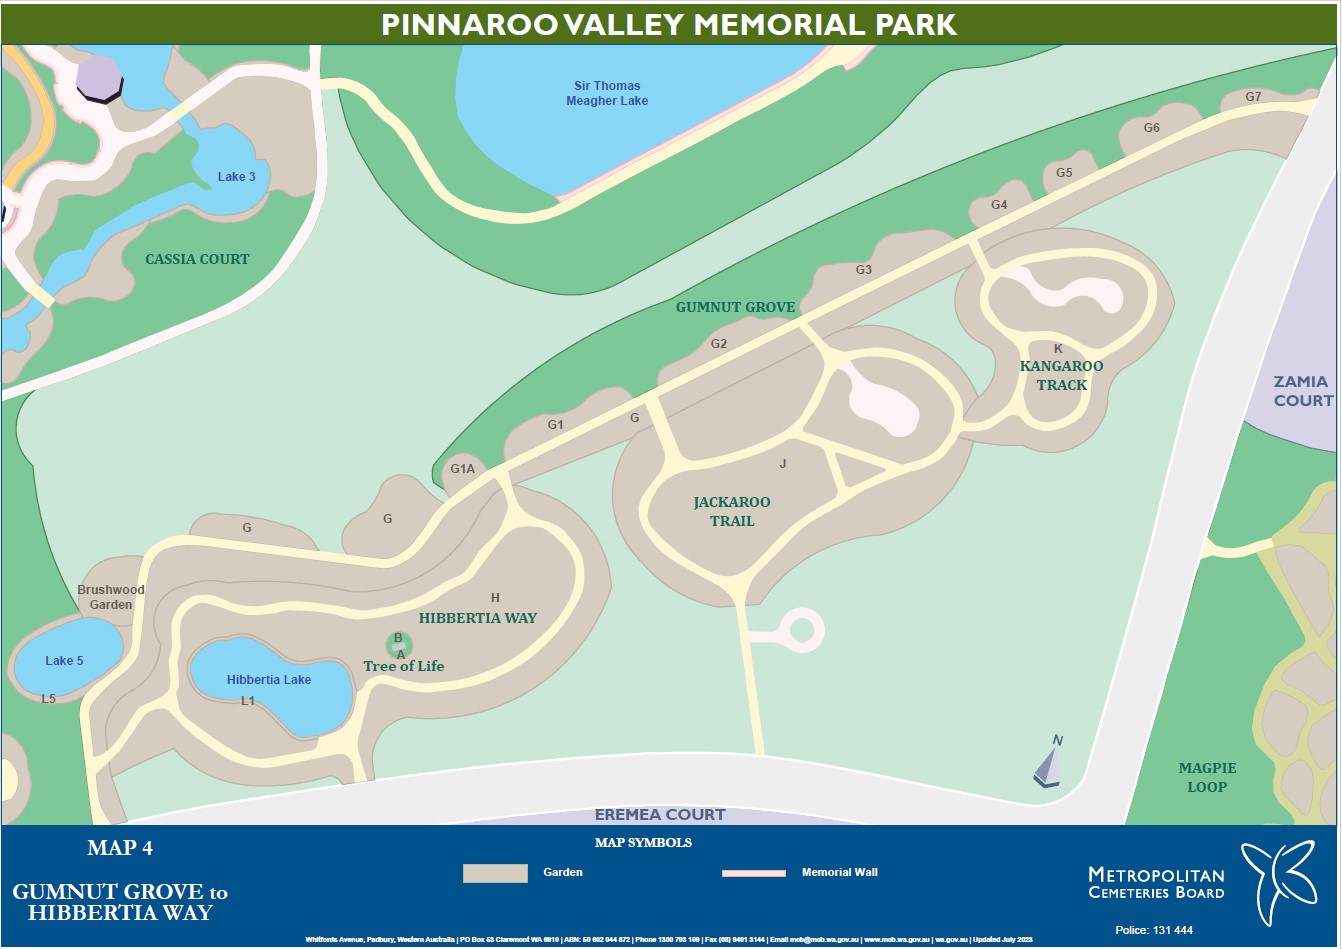 Map 4 Gumnut Grove to Hibbertia Way Pinnaroo Valley Memorial Park